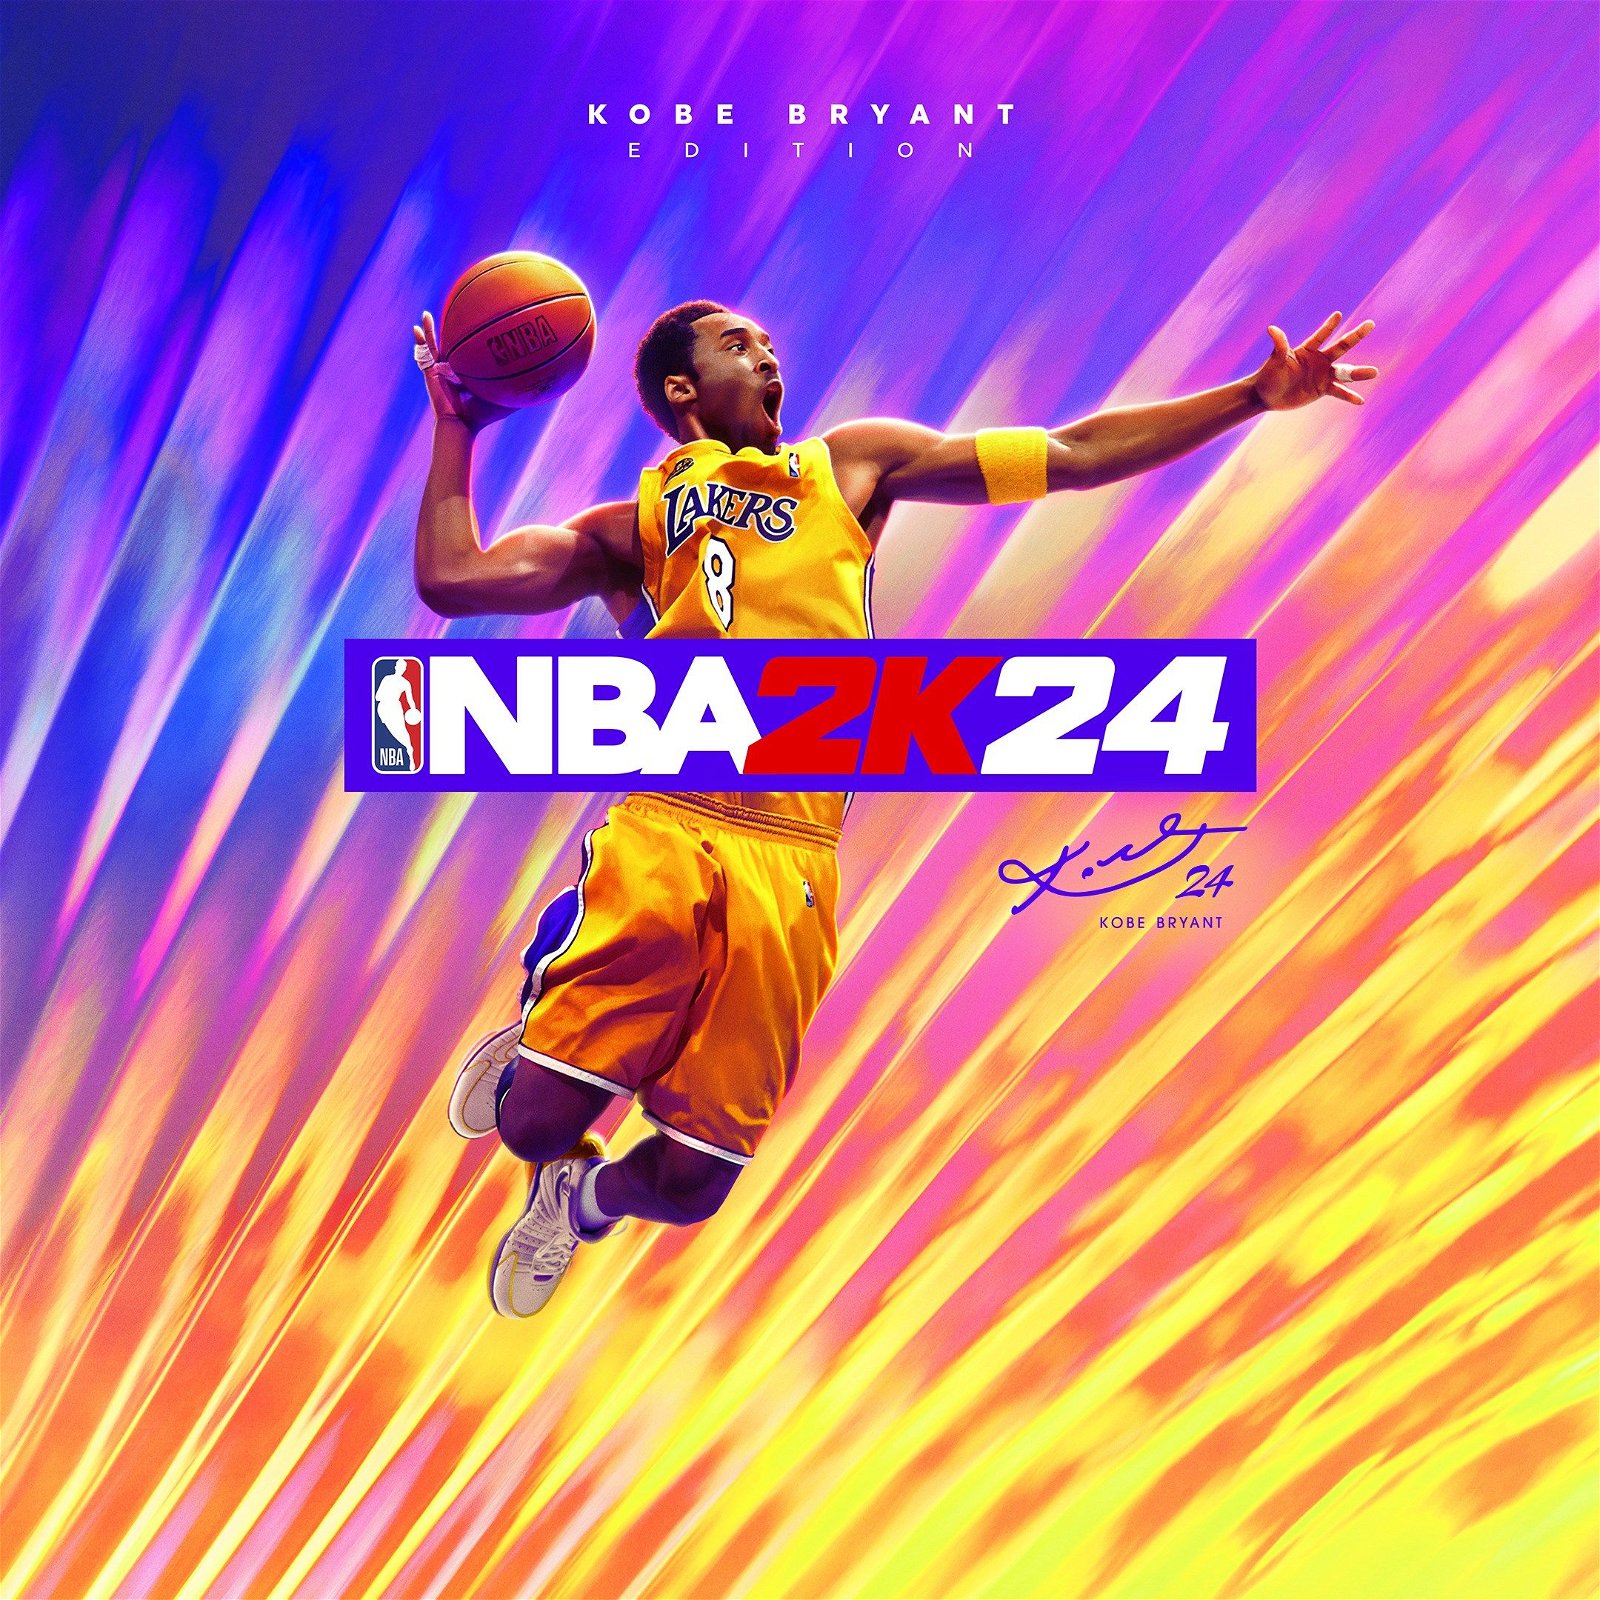 Image of NBA 2K24